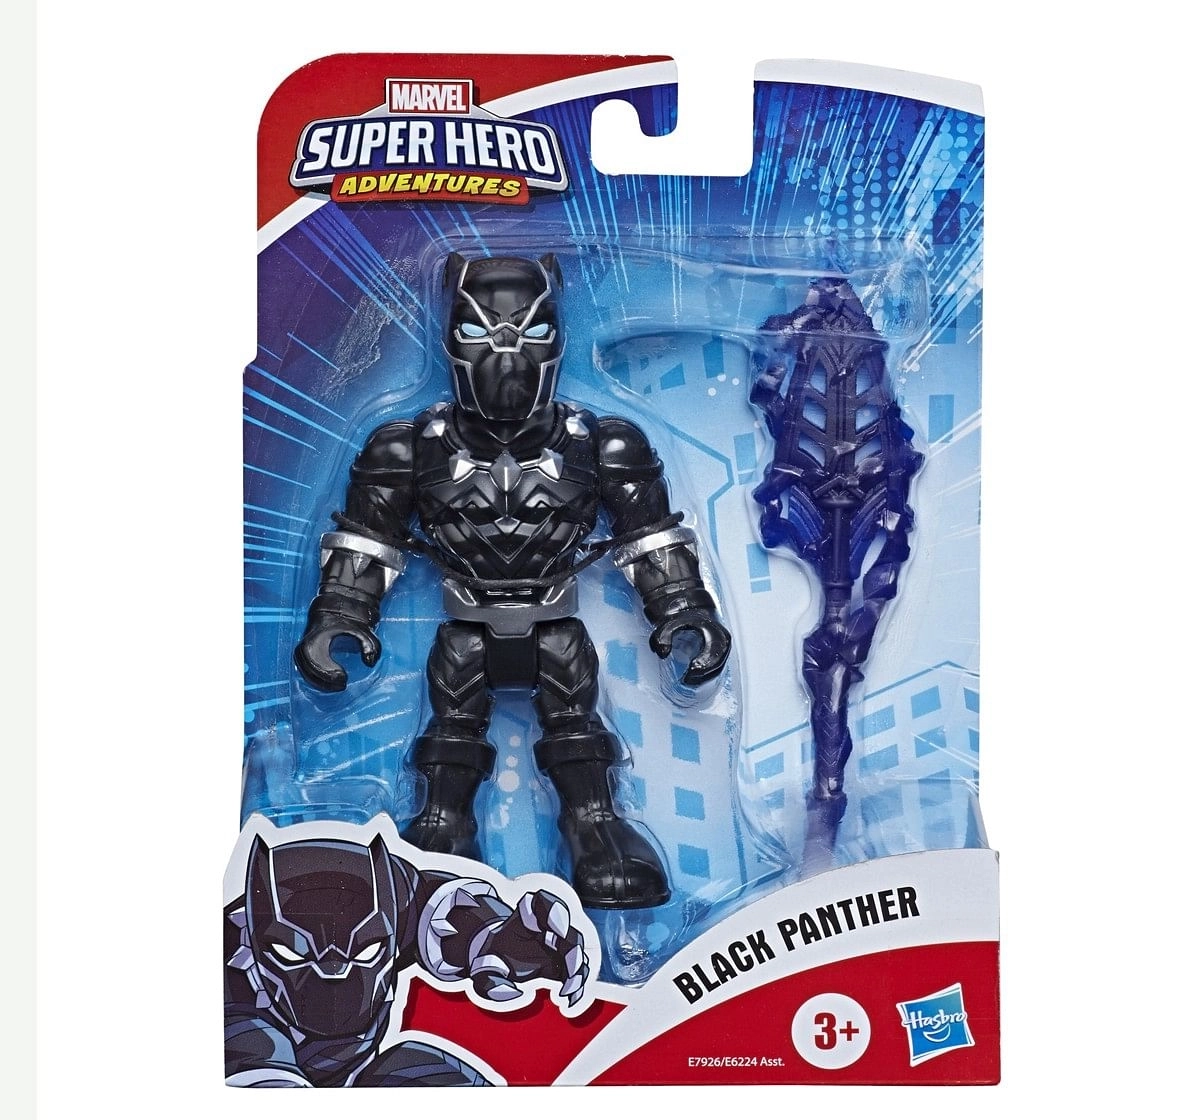 Playskool Super Hero Adventures Mega Mini Black Panther Action Figure Multicolor 4Y+